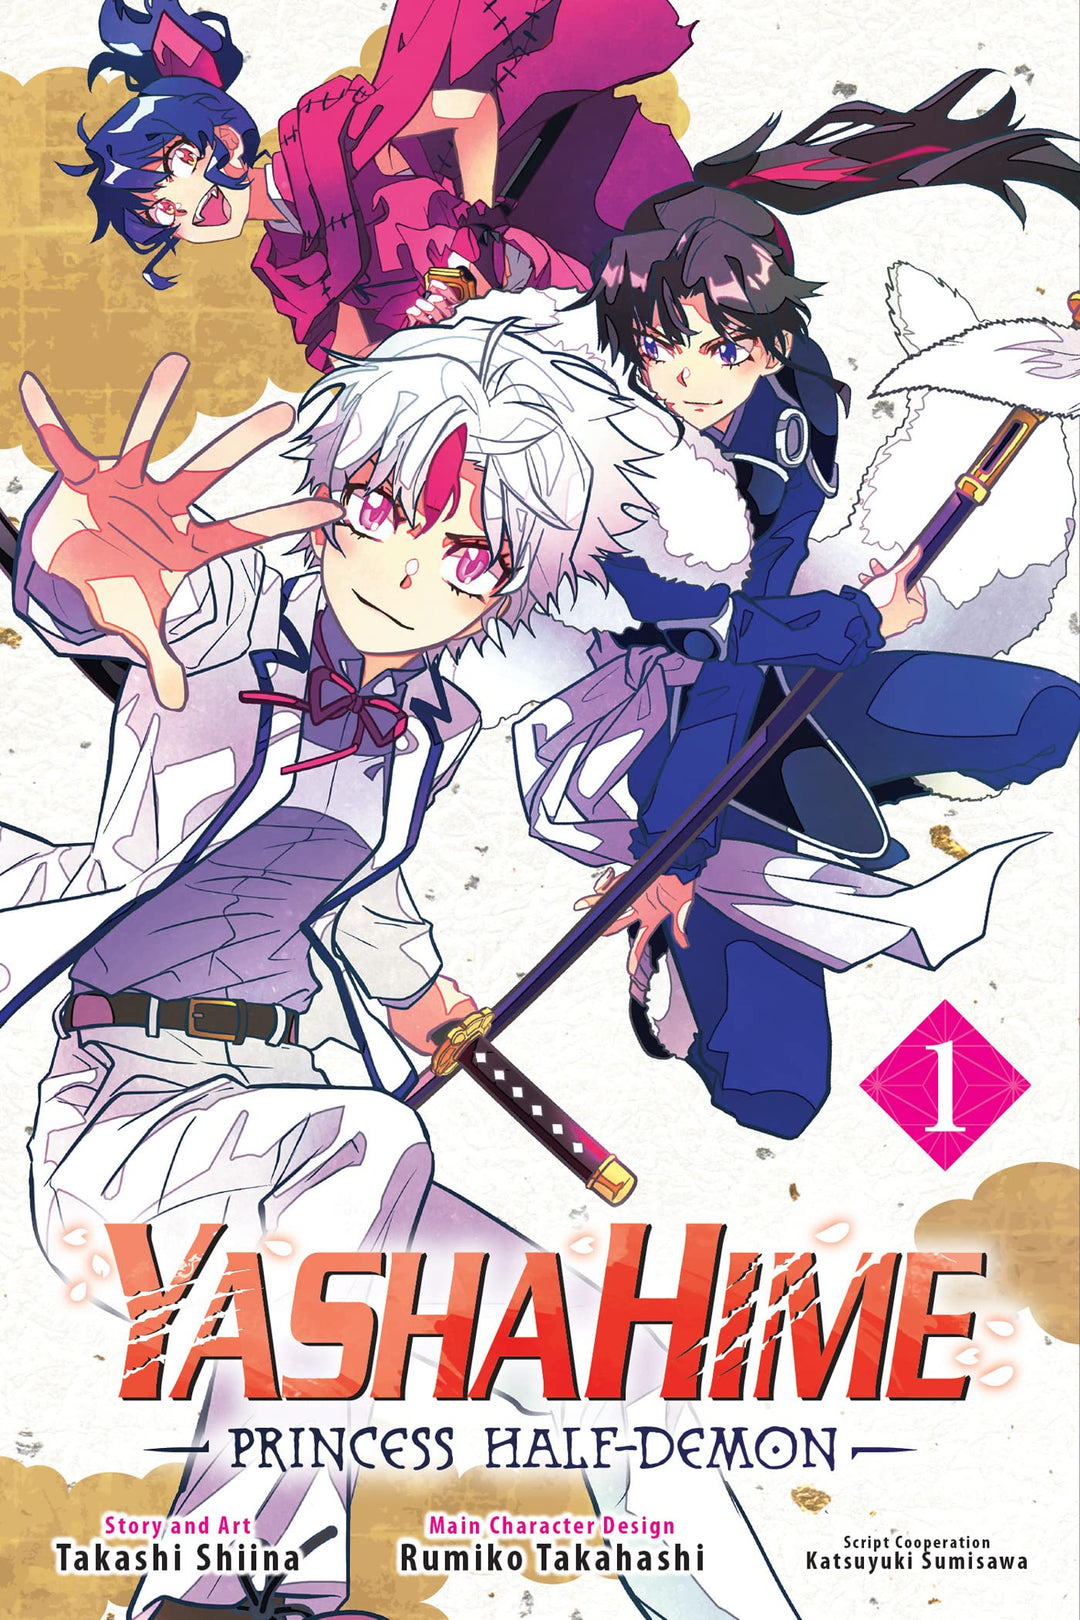 Yashahime Princess Half Demon Graphic Novel Volume 01